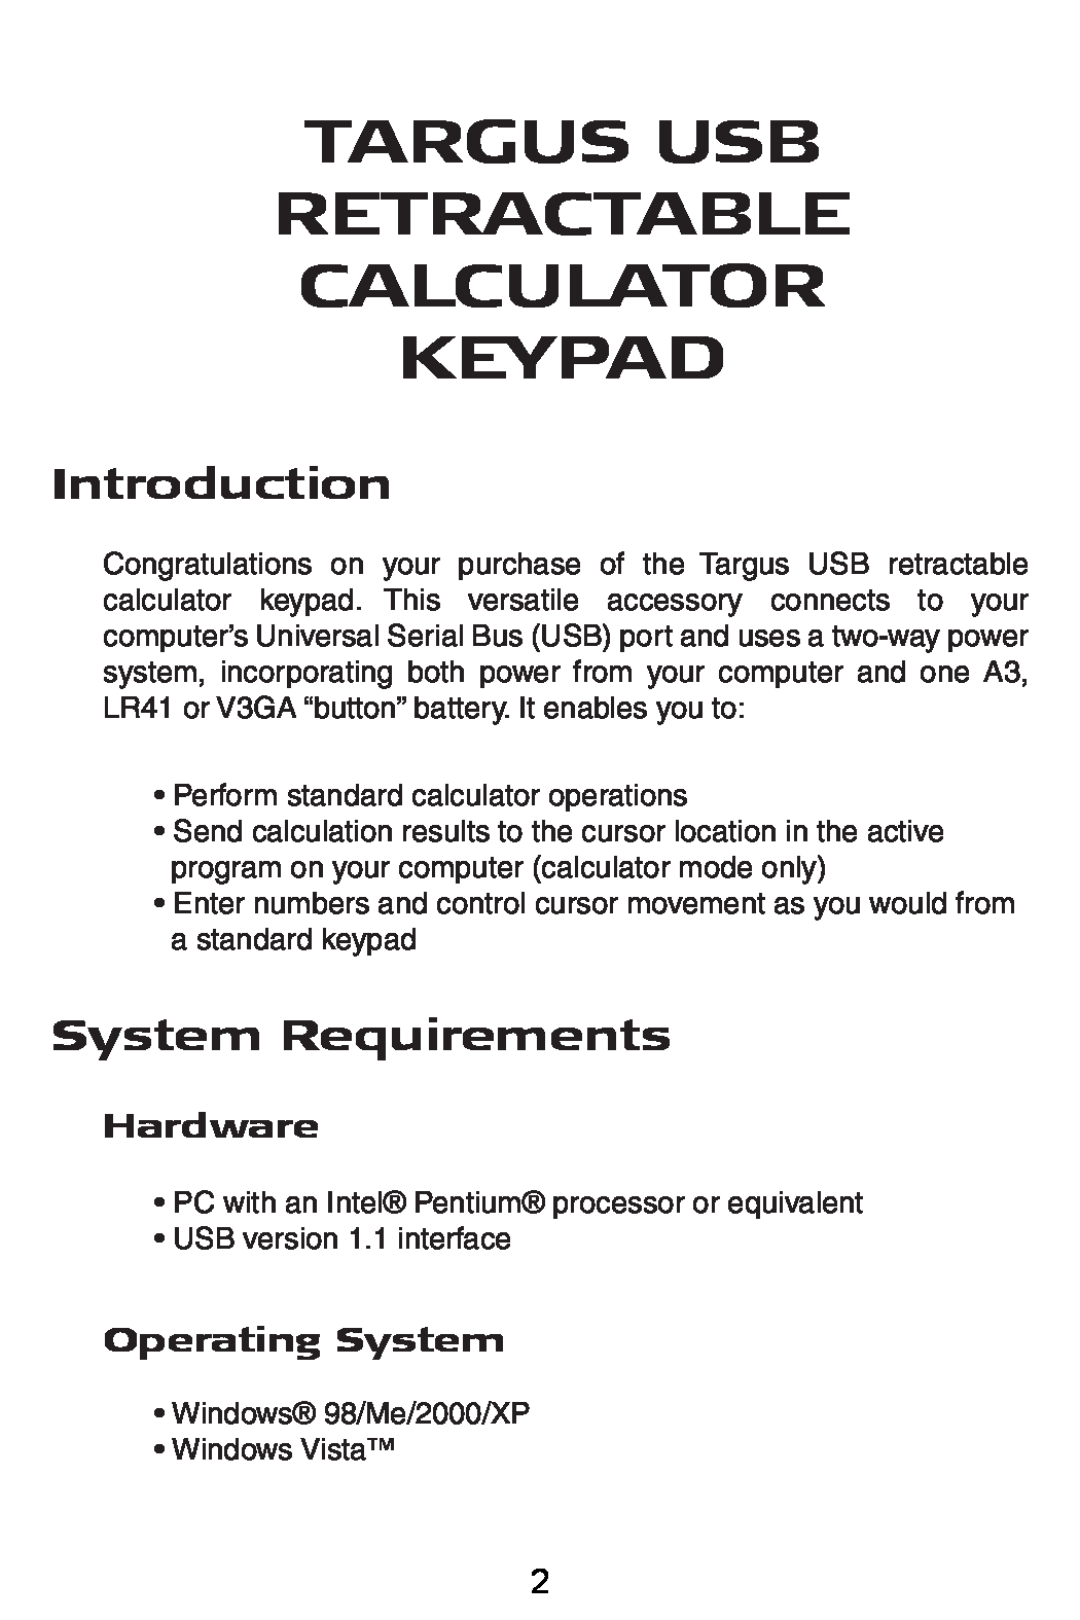 Targus USB Retractable Calculator Keypad Targus Usb Retractable Calculator Keypad, Introduction, System Requirements 